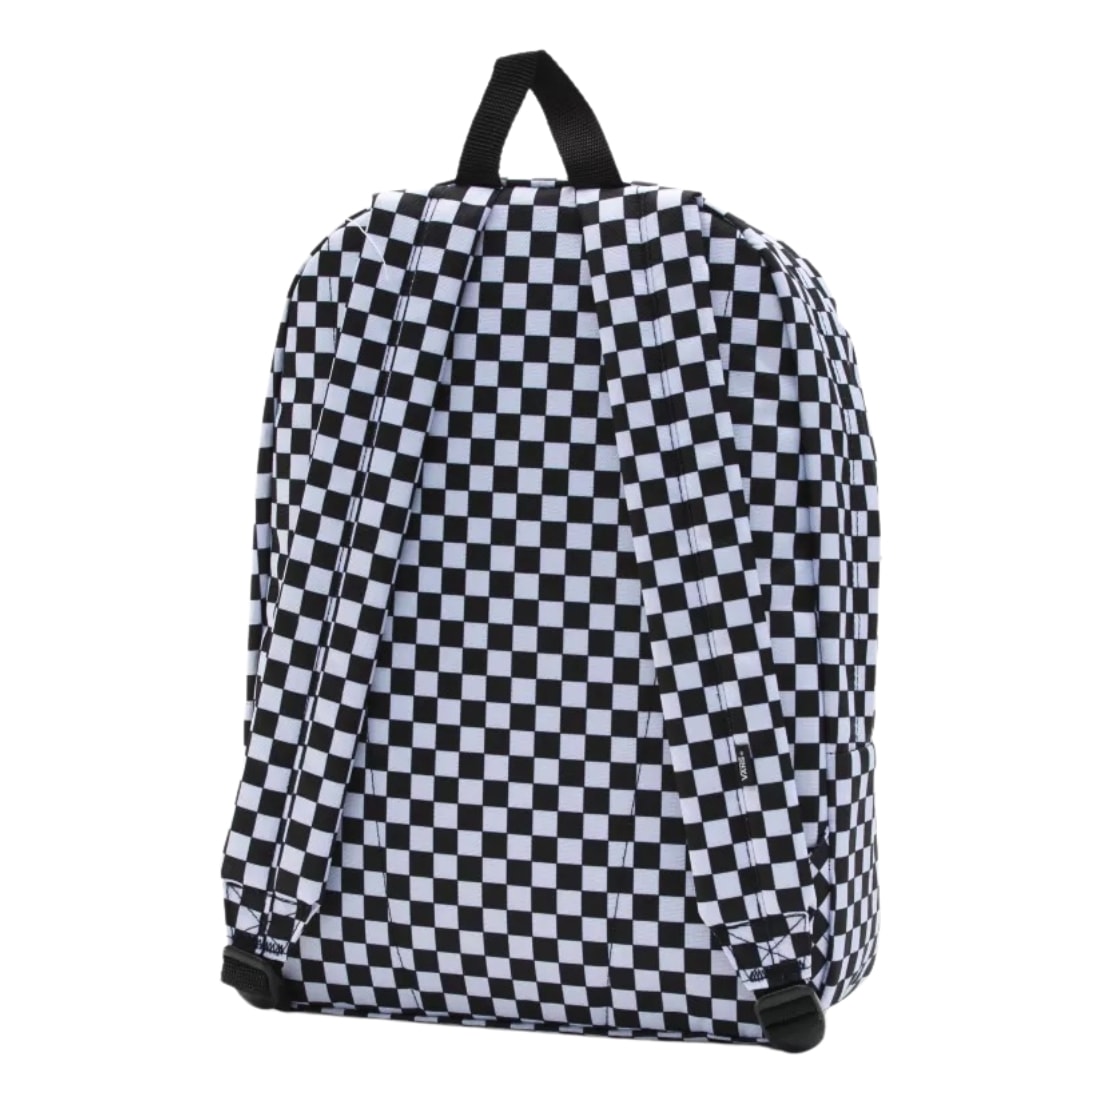 Vans Old Skool Grom Backpack - Black White Checkers